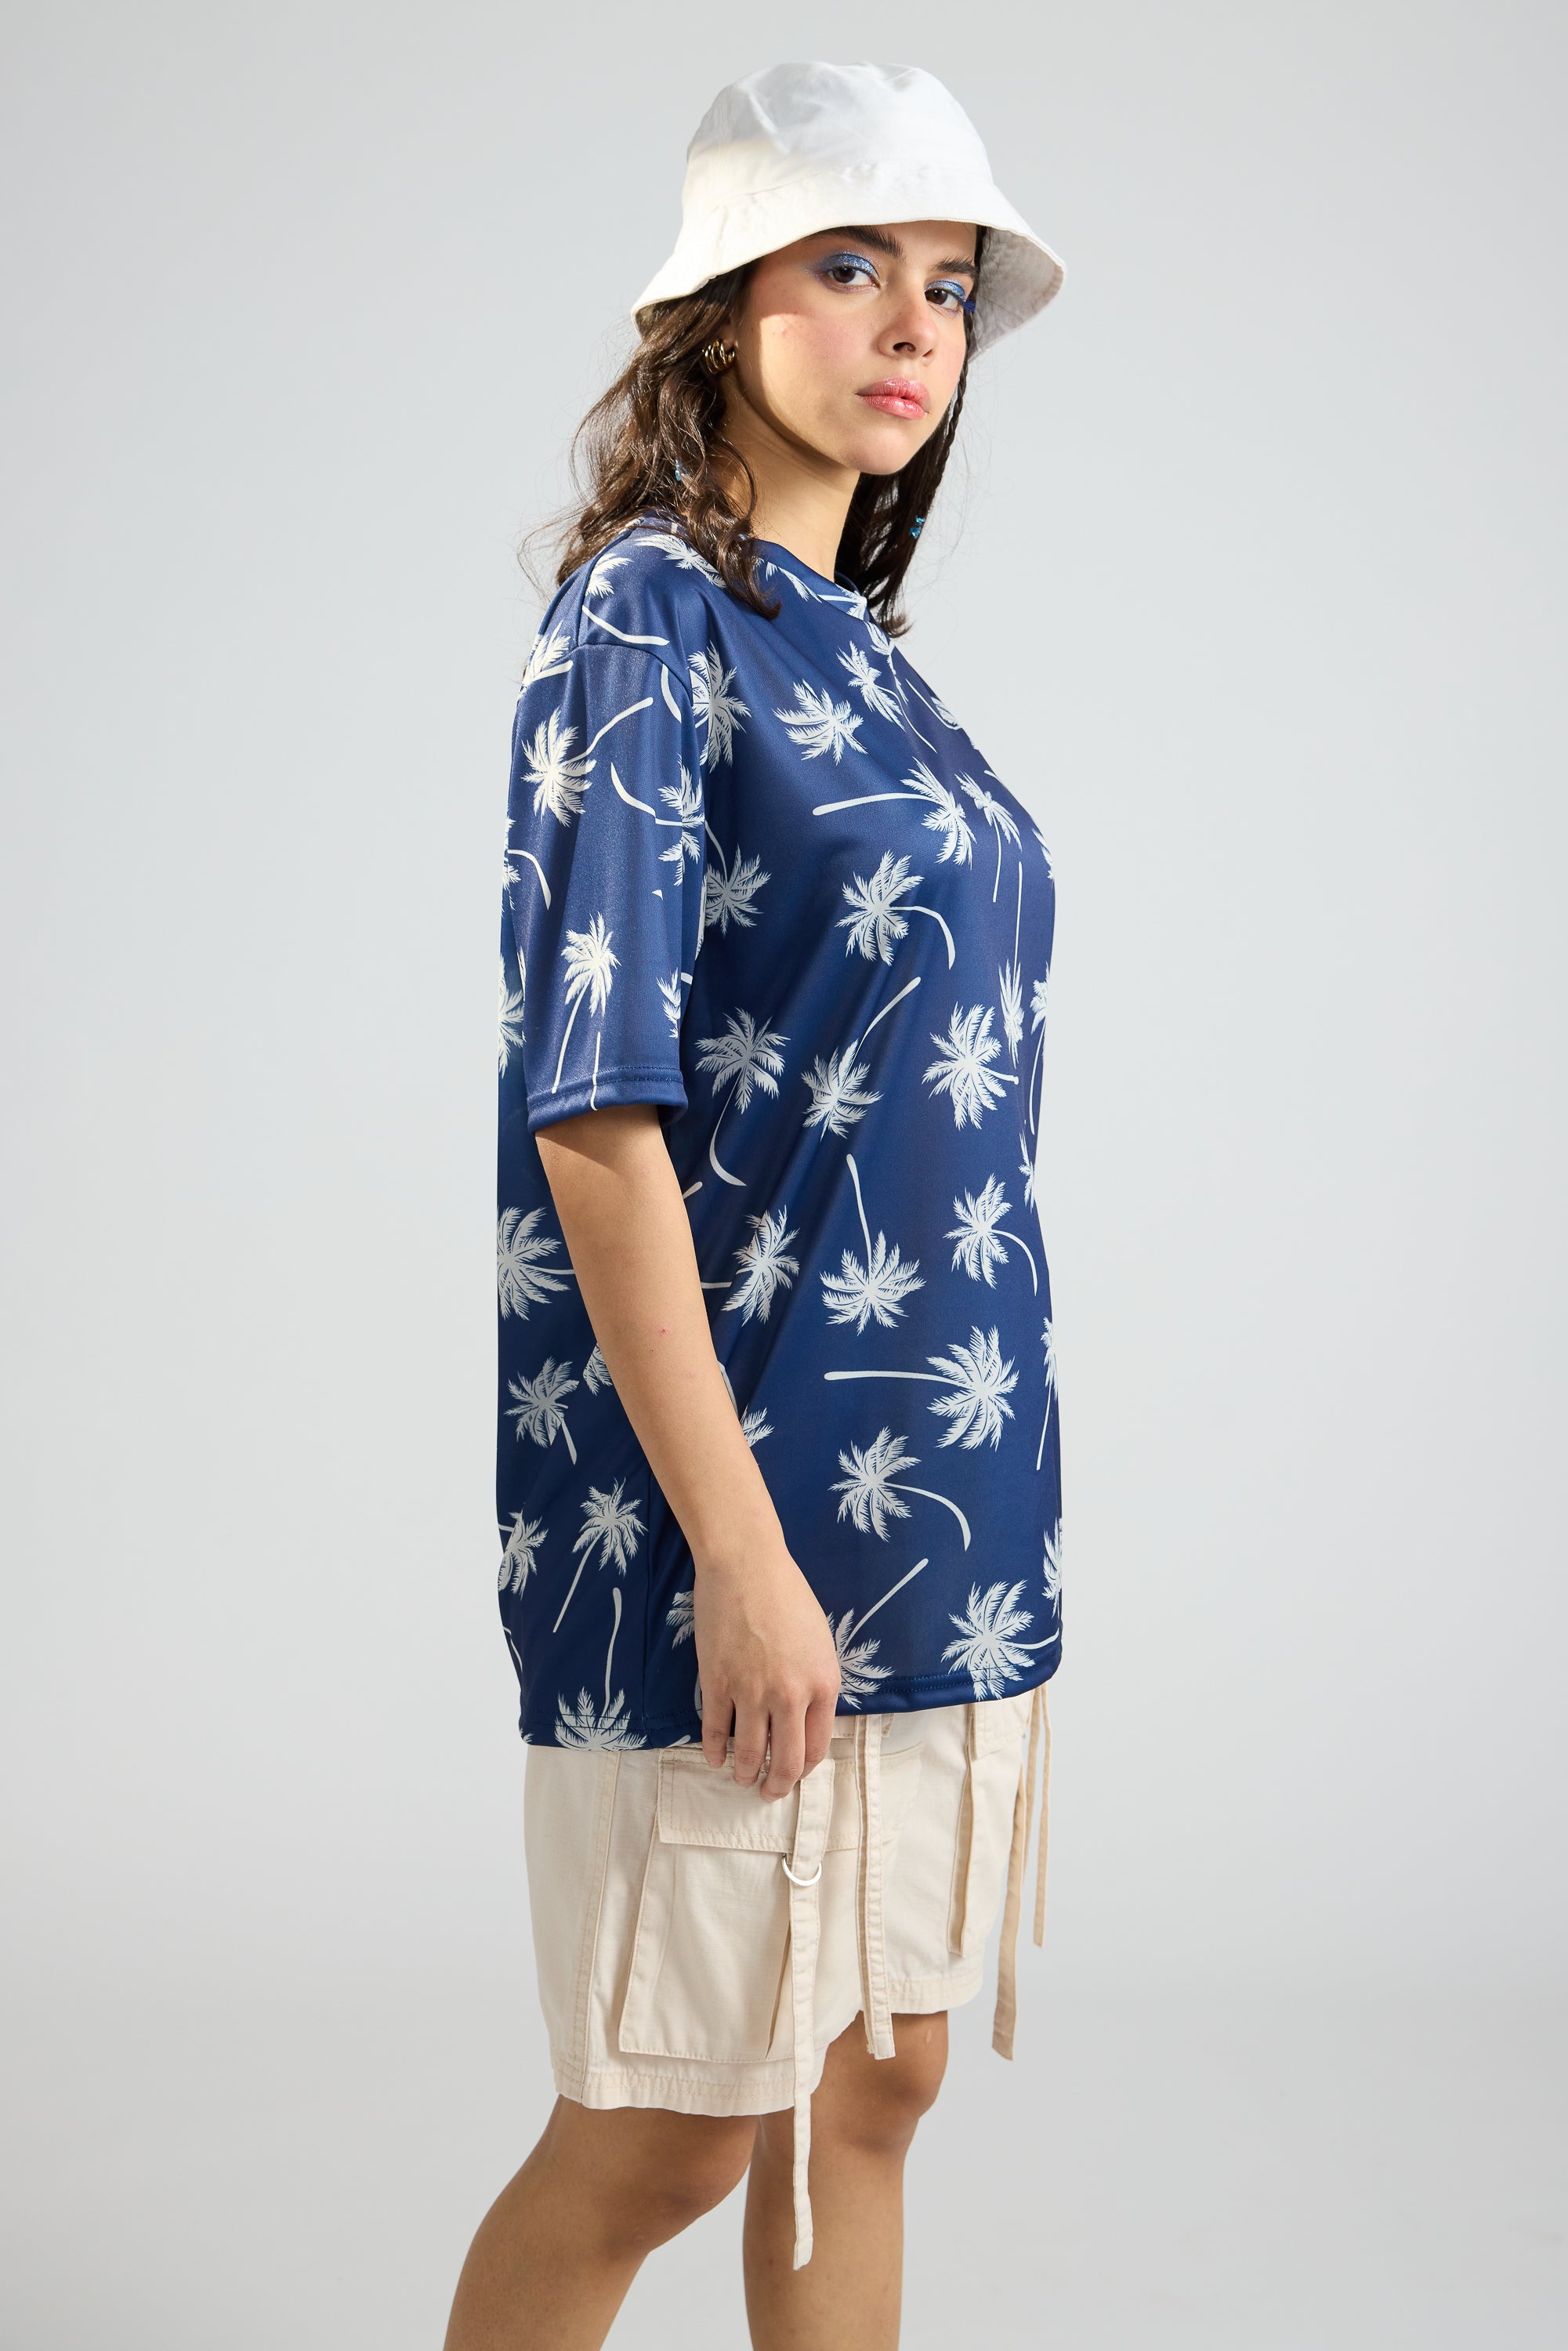 Printed Women's T-Shirt- Coconut Trees